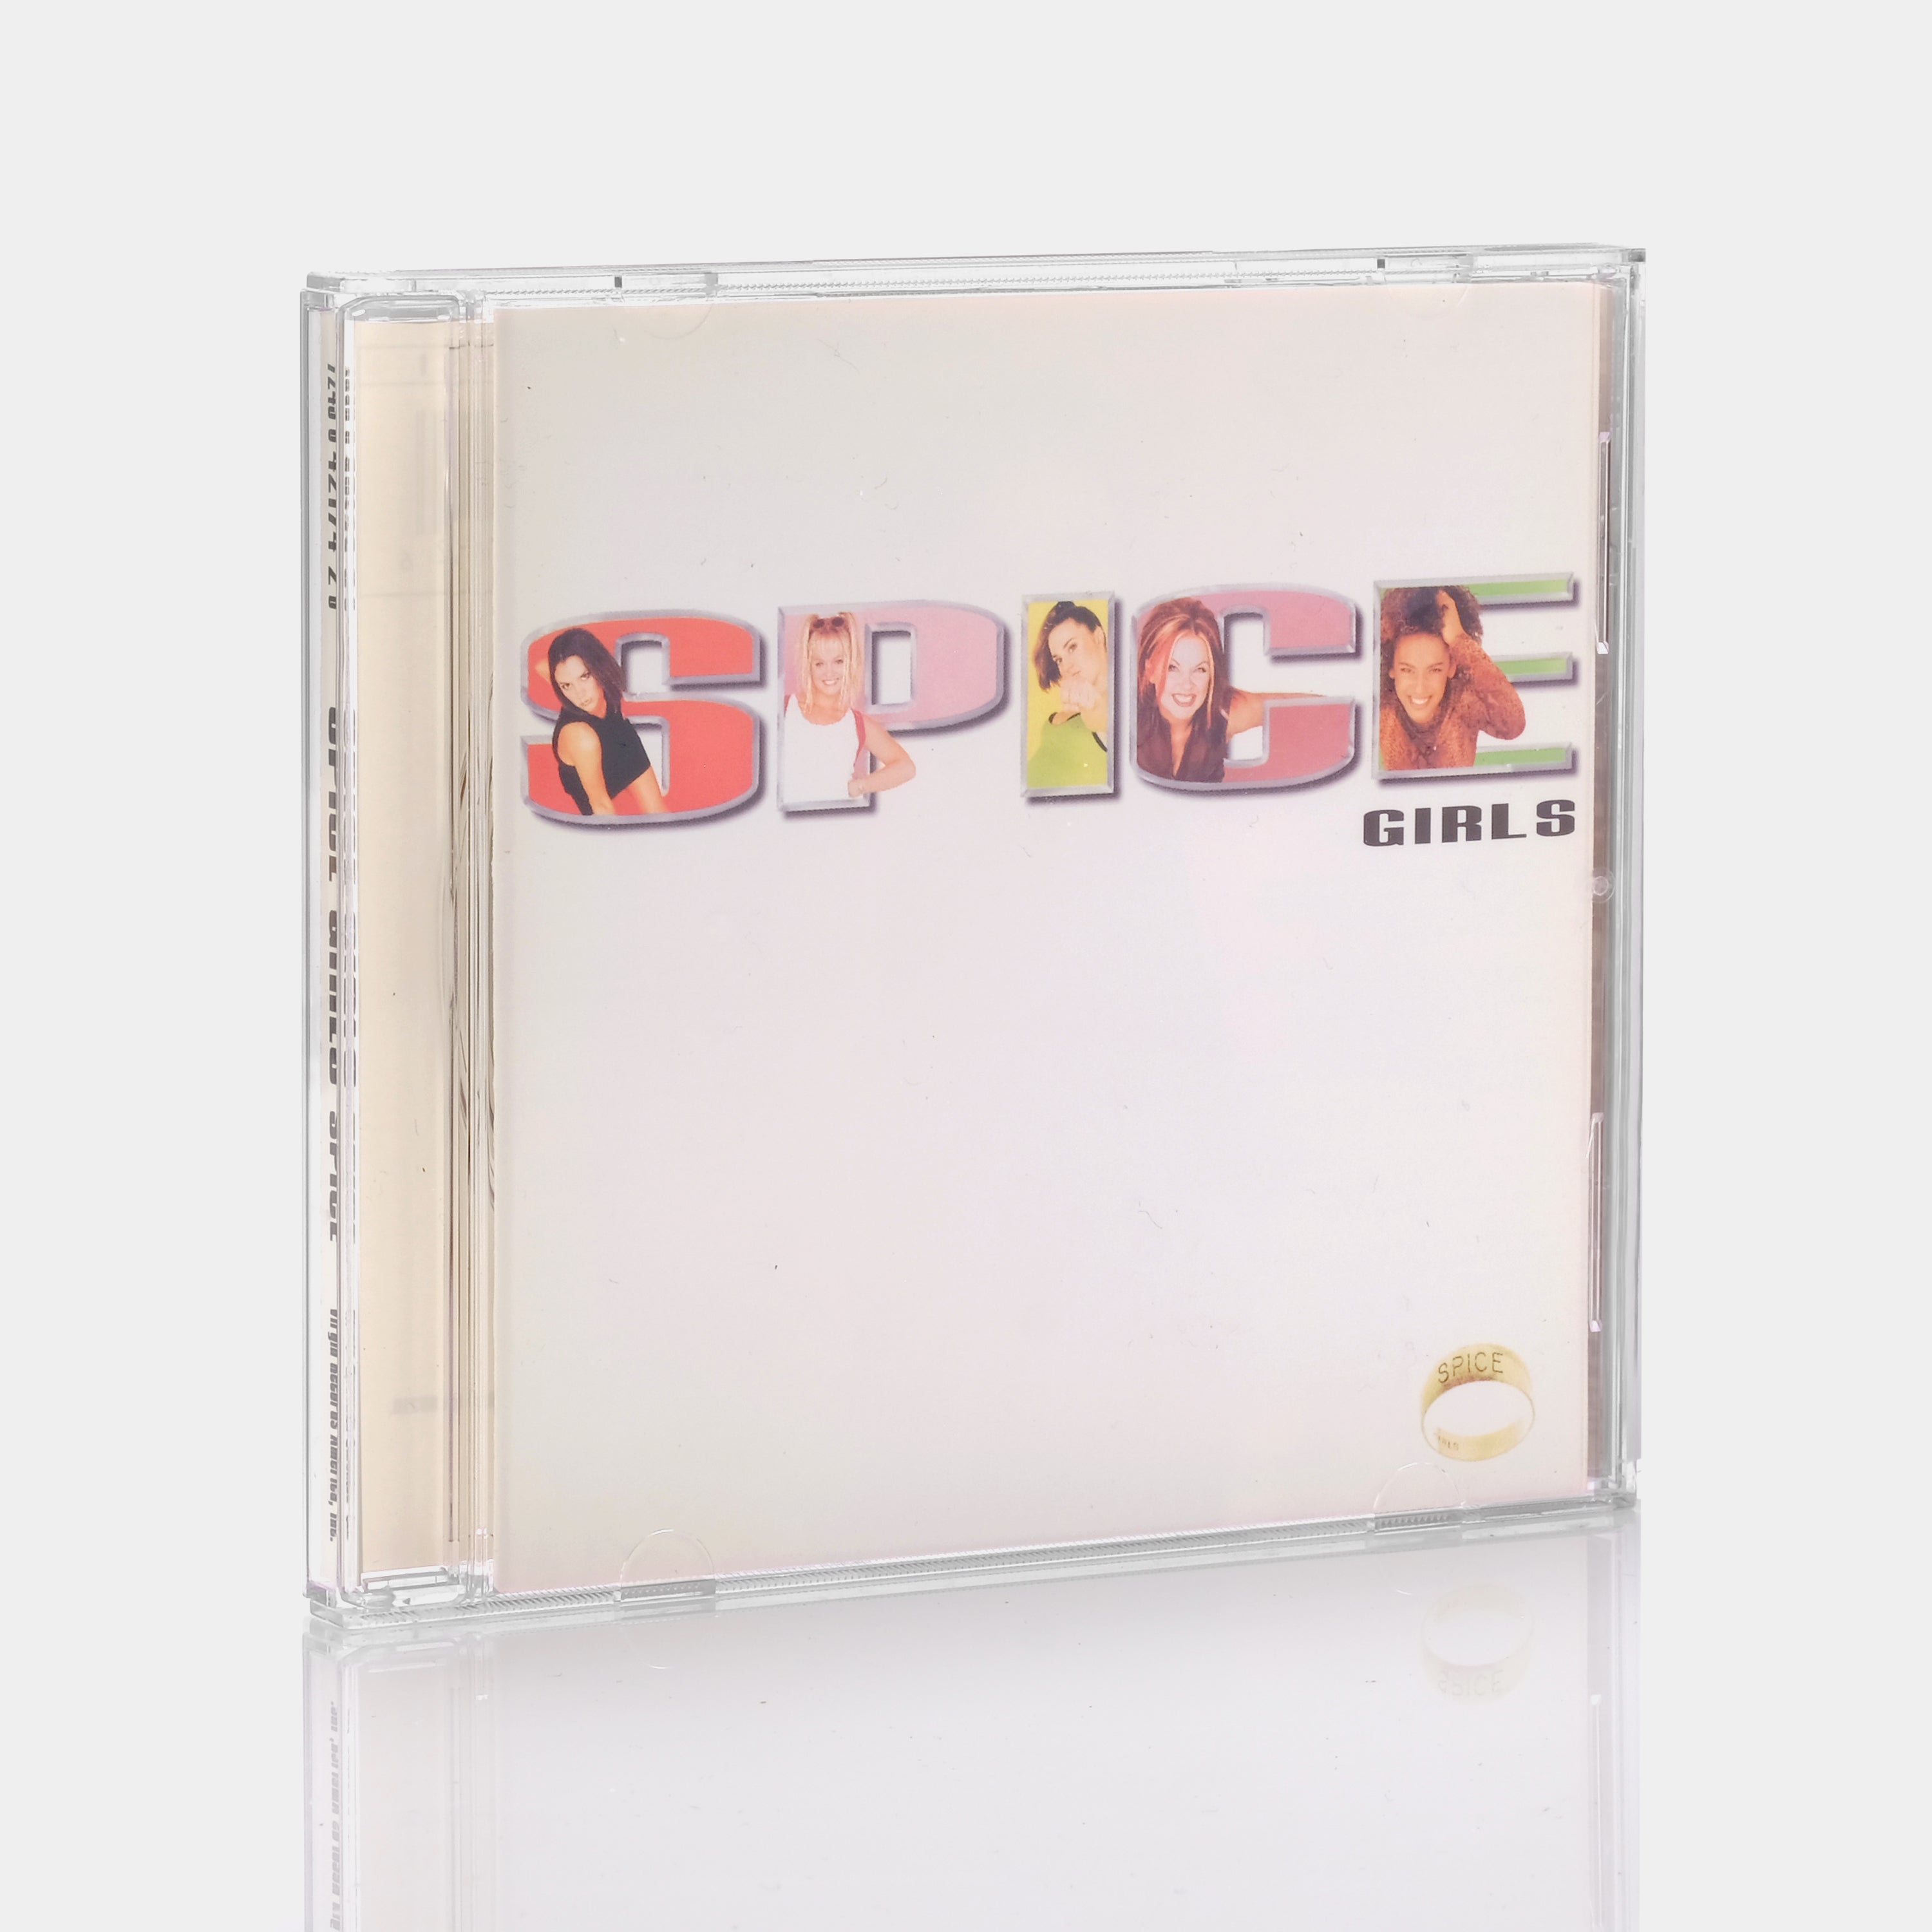 Spice Girls - Spice CD